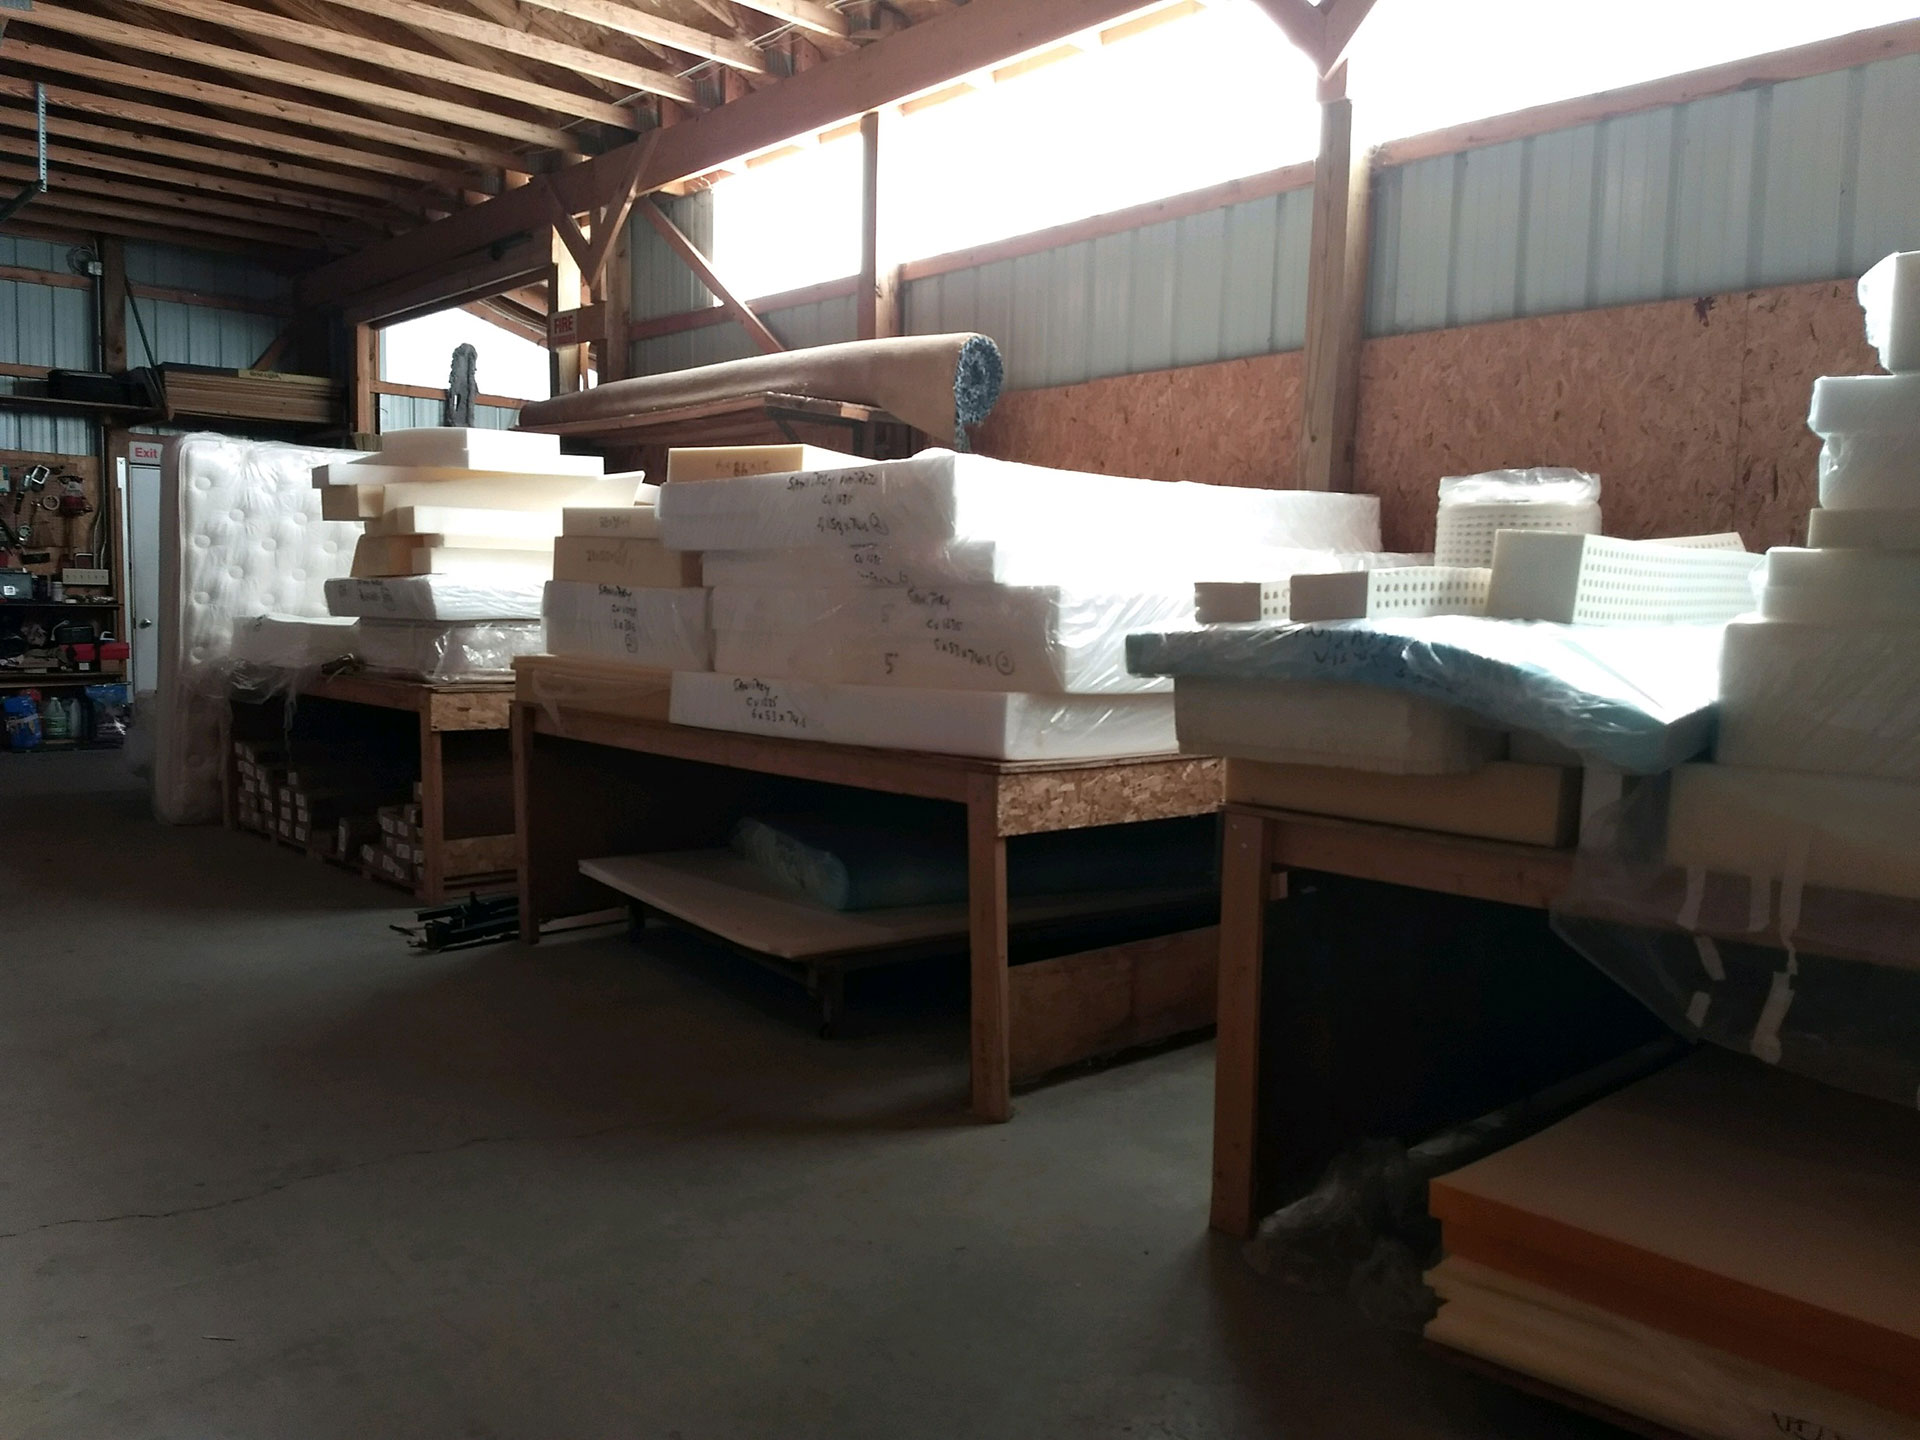 mattress stores in saginaw michigan